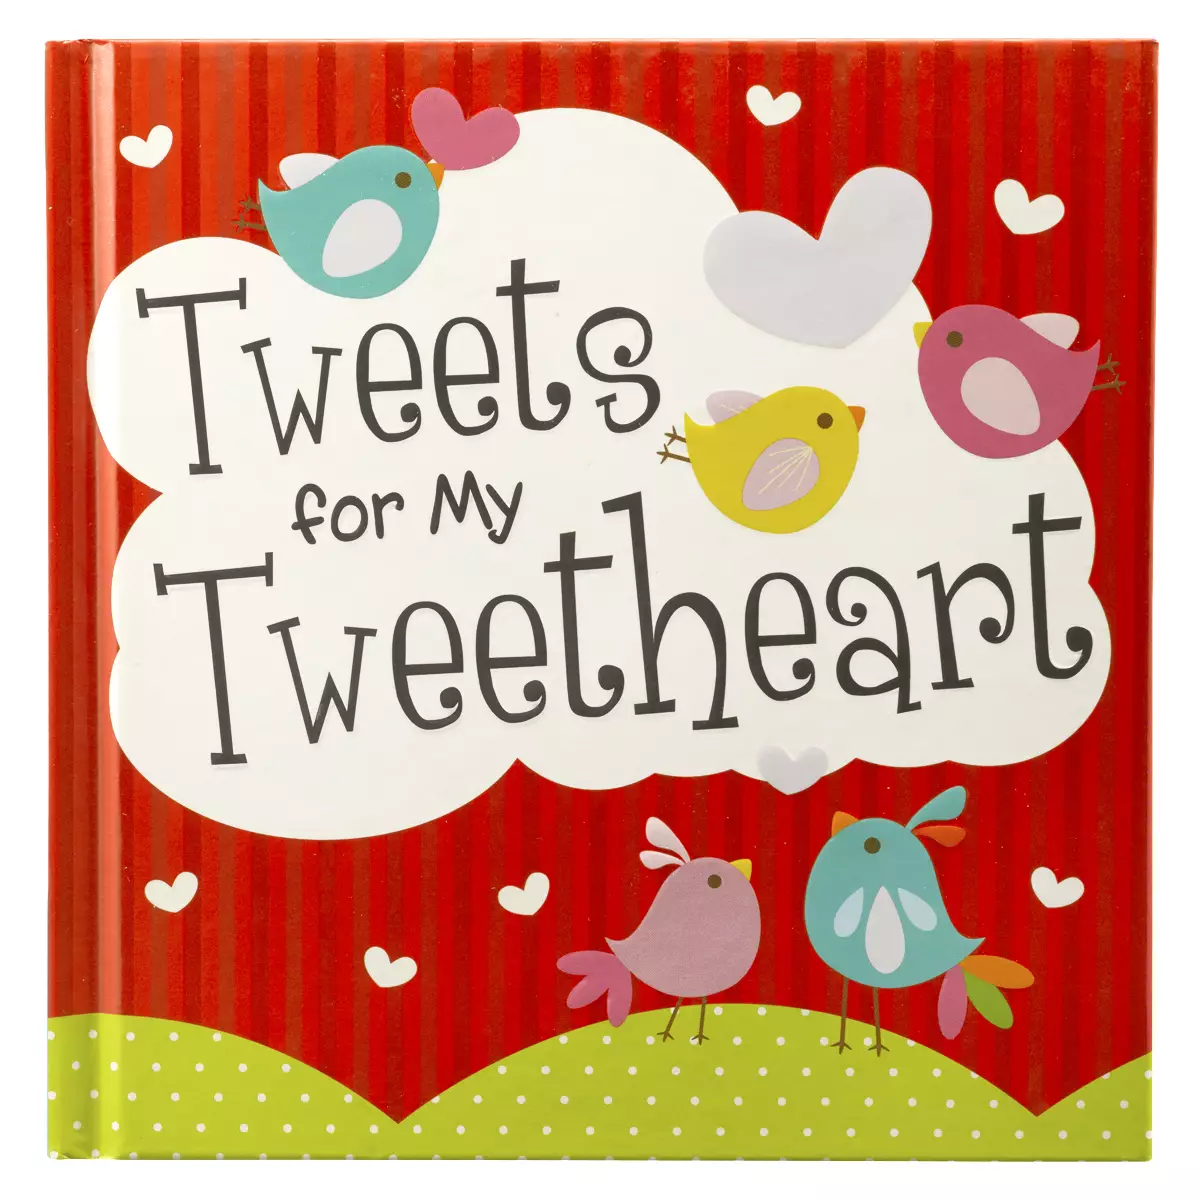 Tweets for my Tweetheart - Hardcover